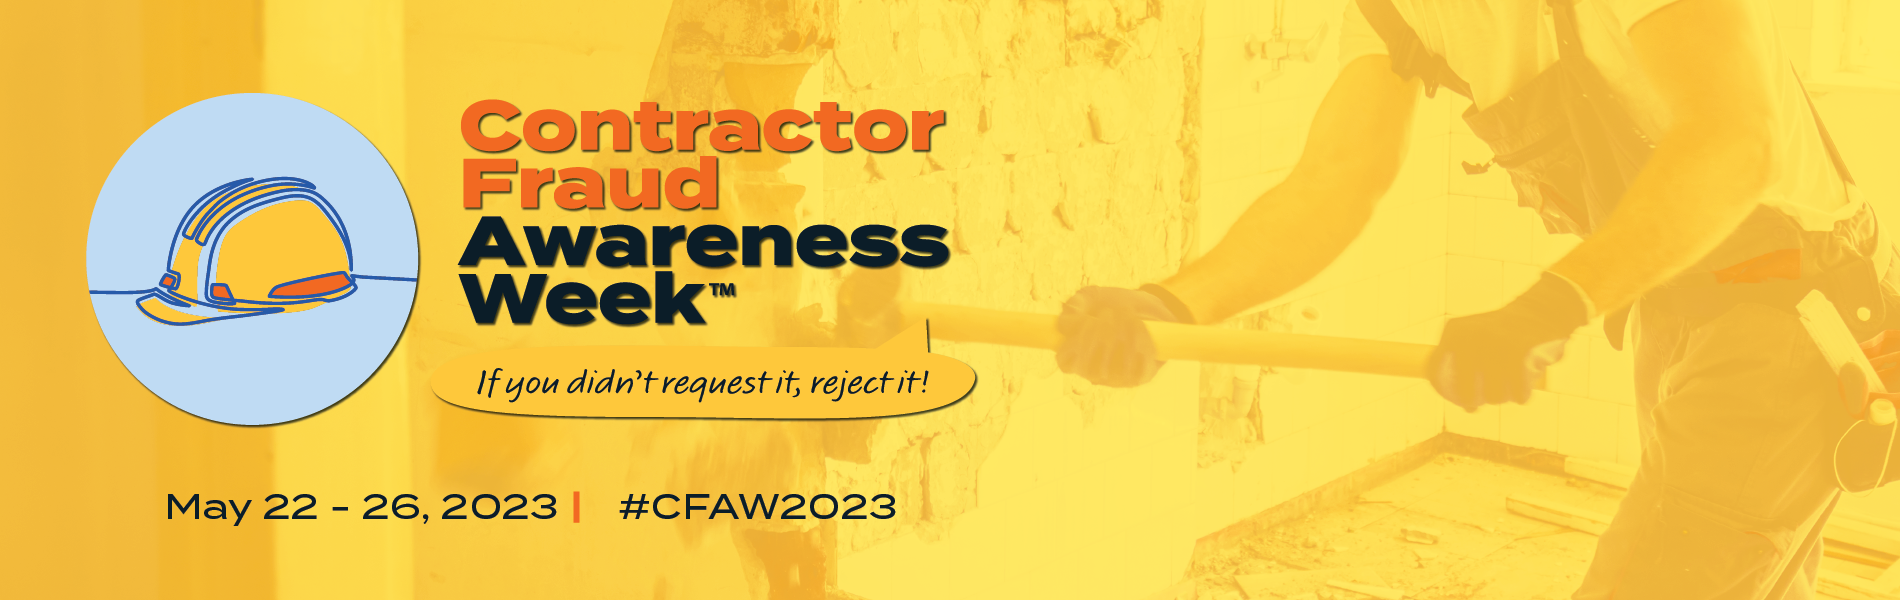 Banner for Contractor Fraud Awareness Week